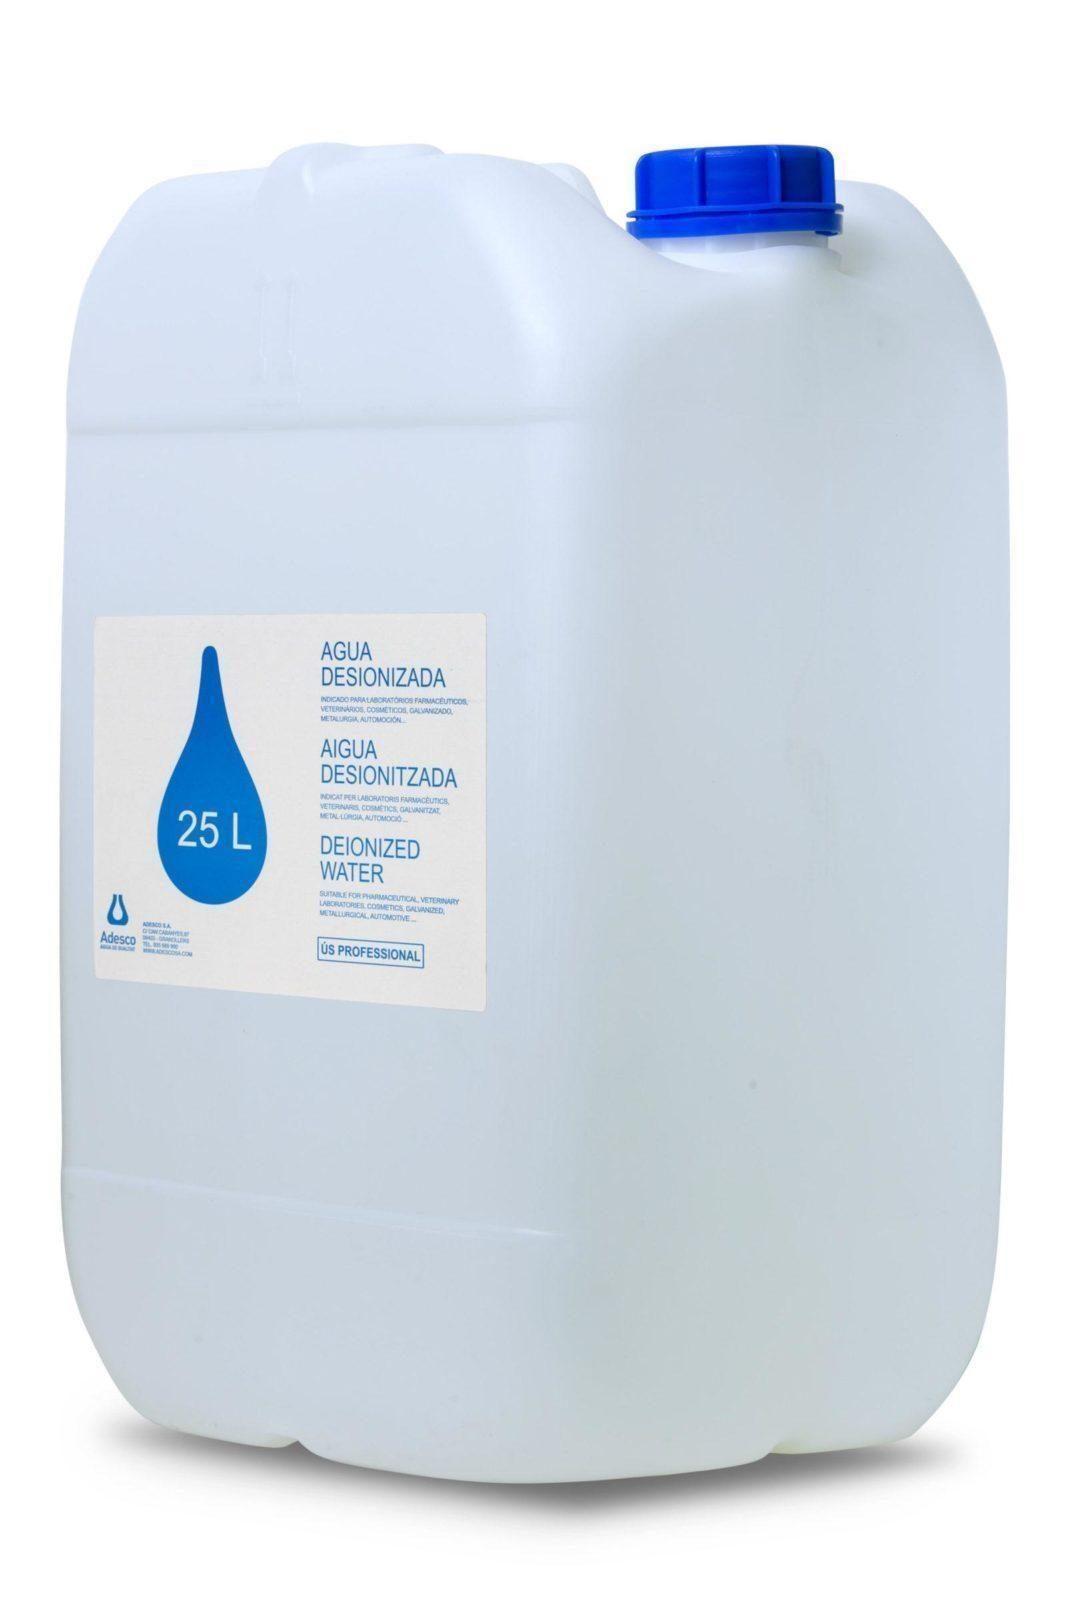 Agua destilada 25l